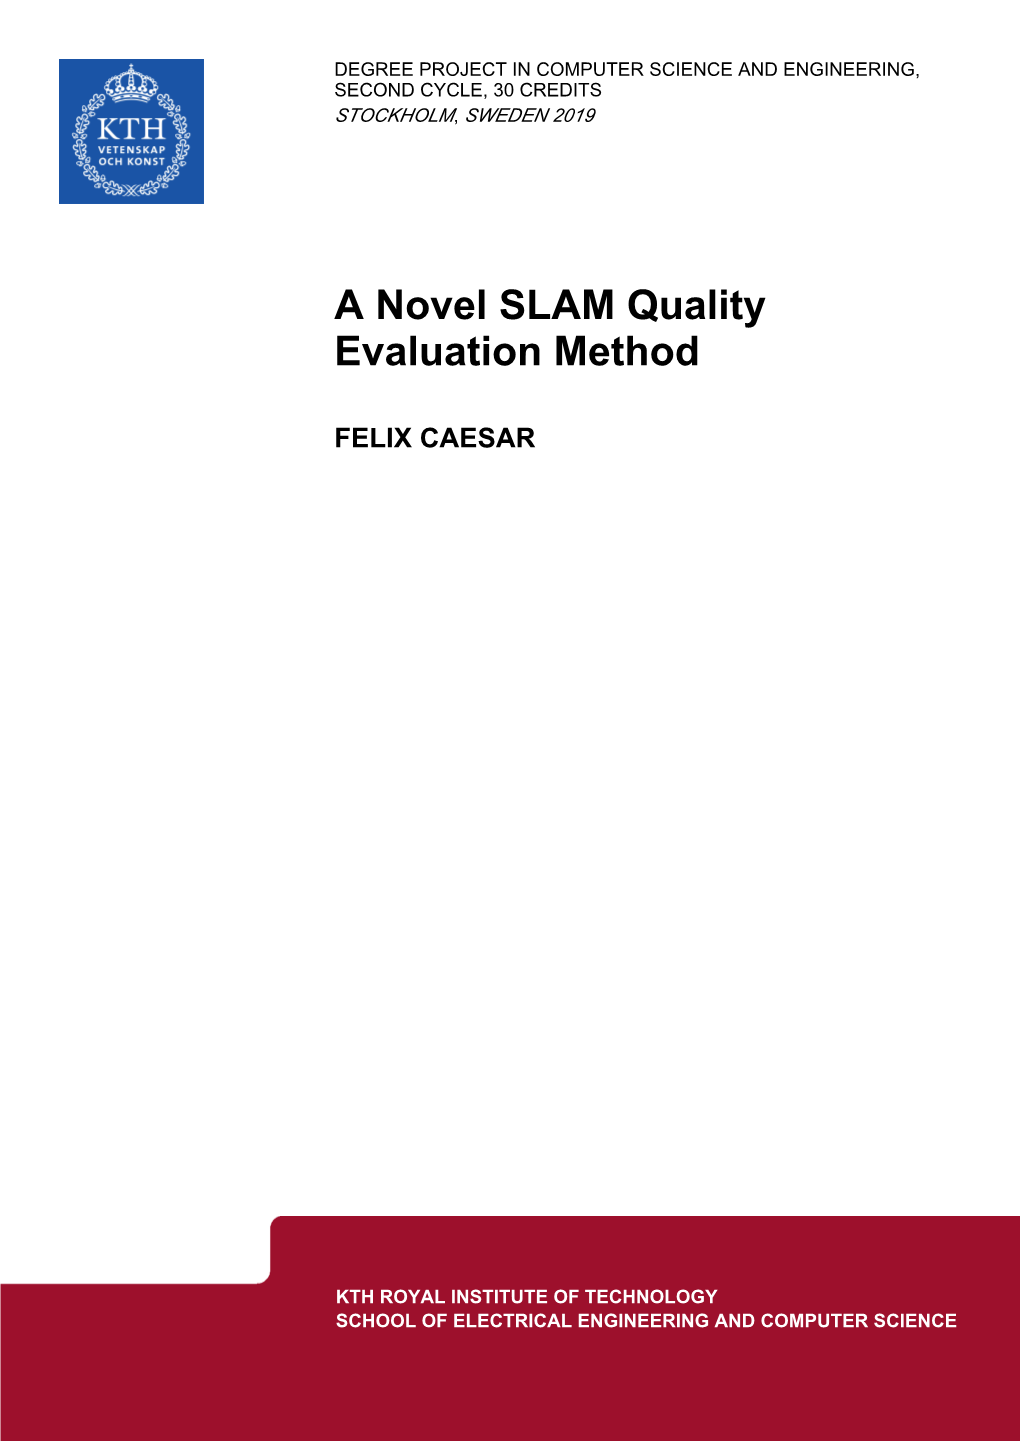 A Novel SLAM Quality Evaluation Method